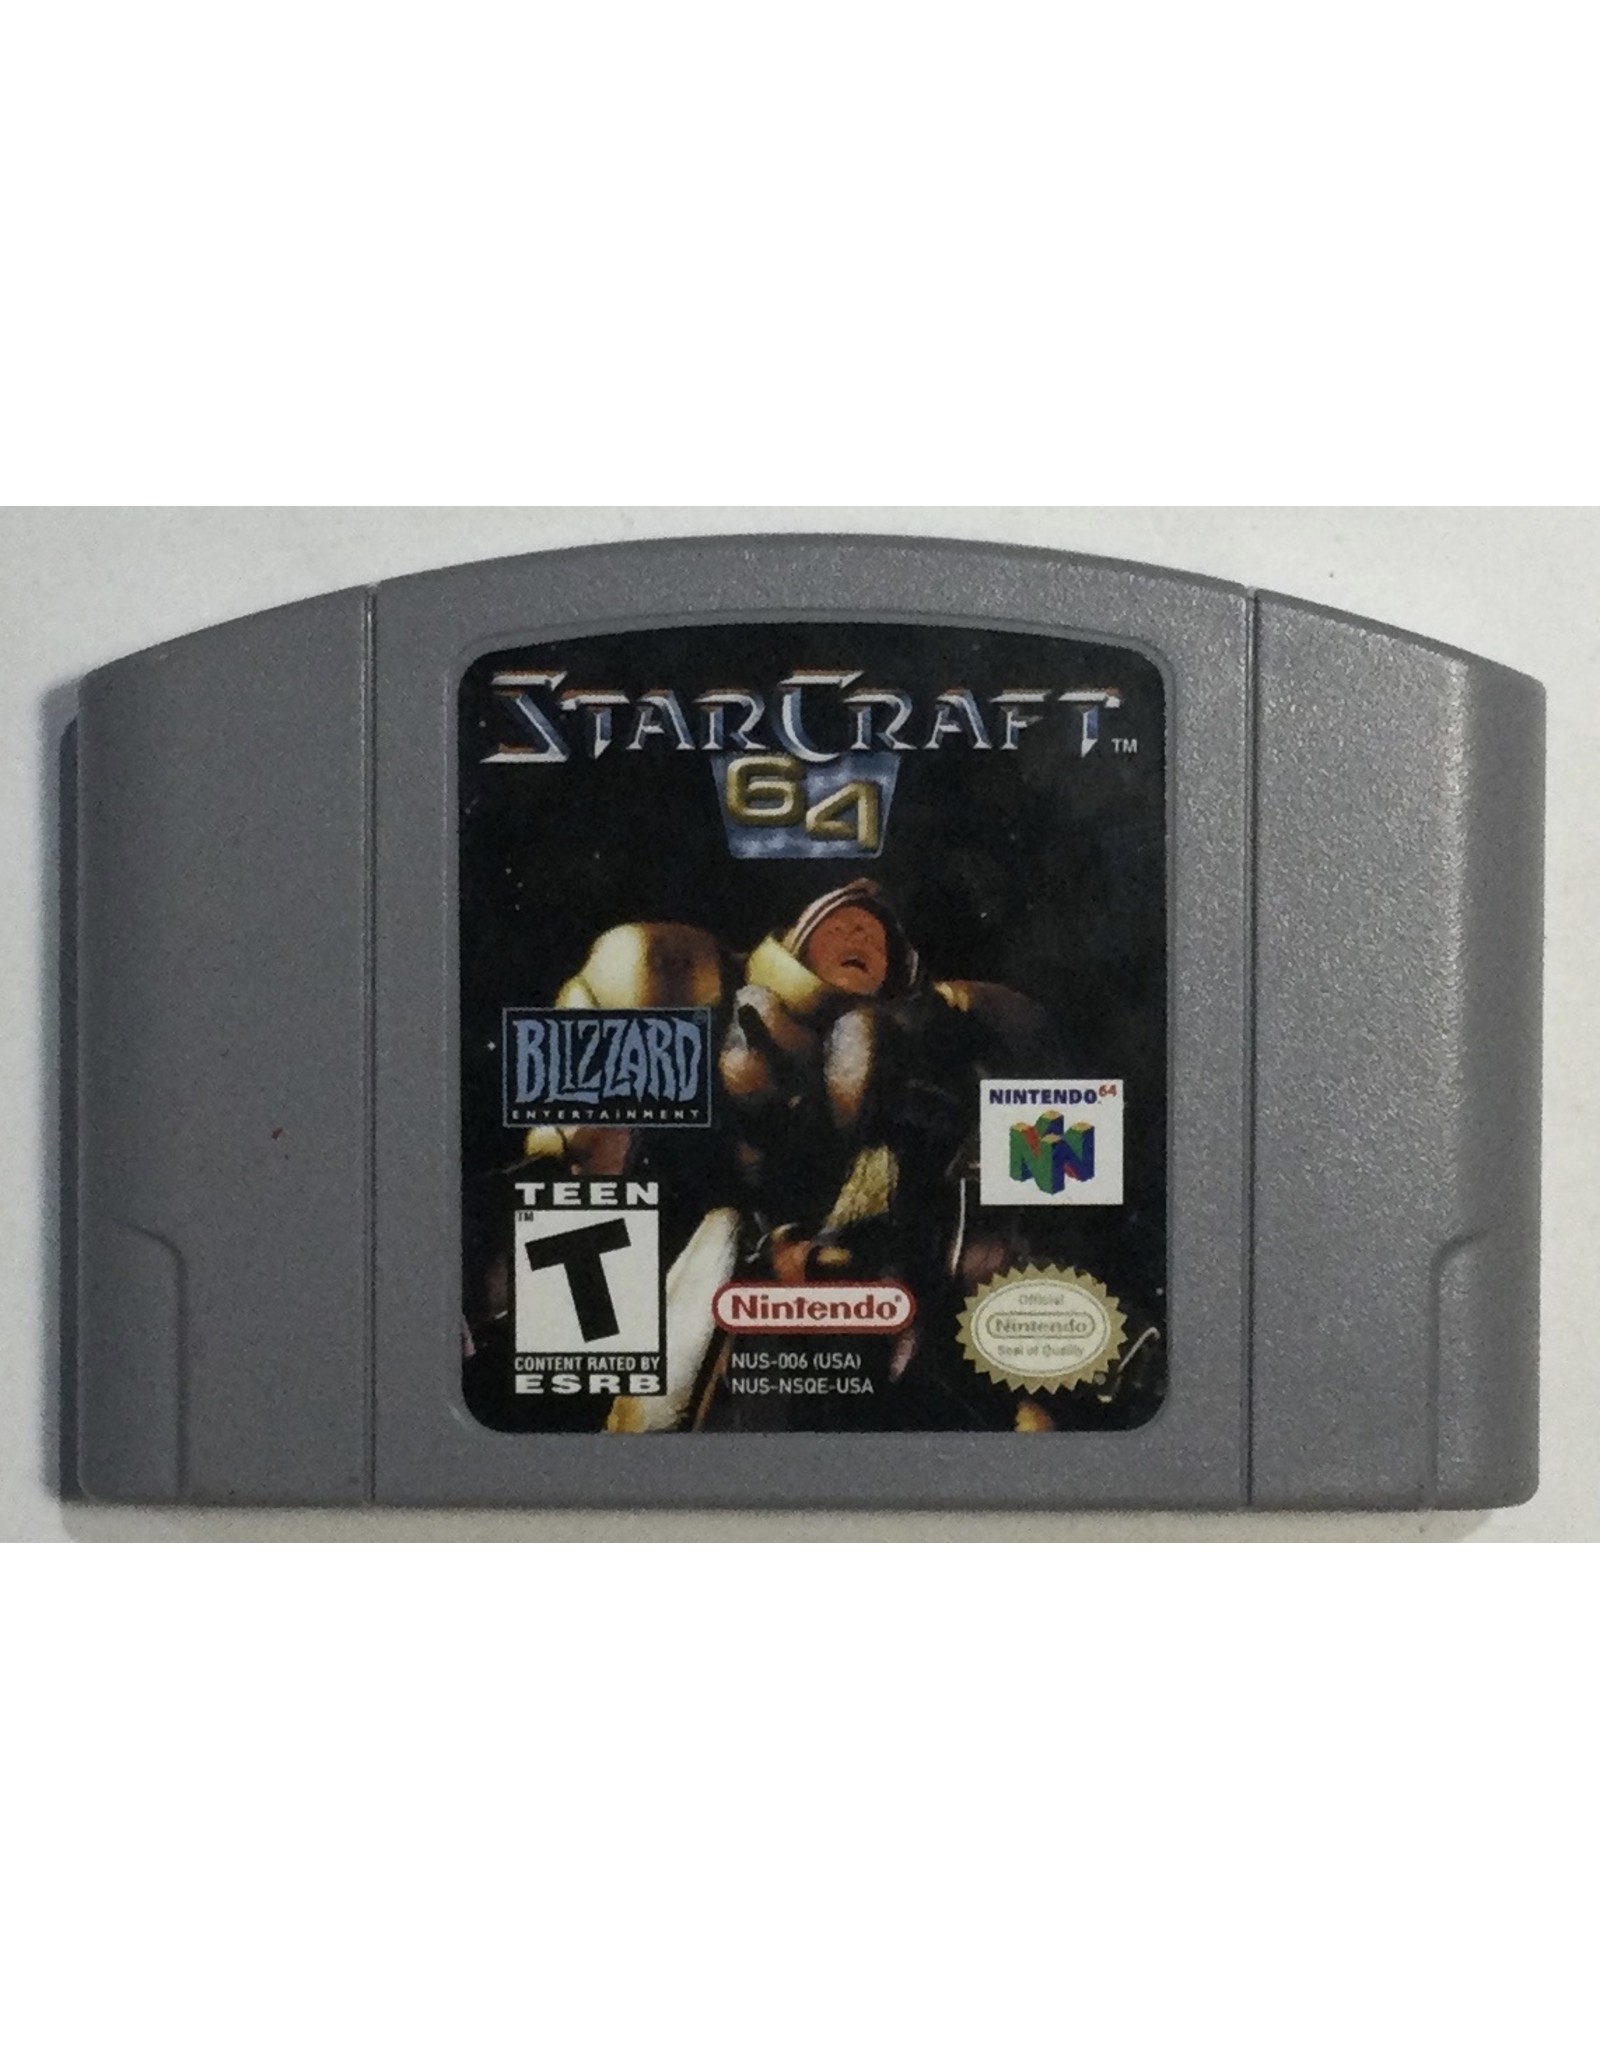 BLIZZARD ENTERTAINMENT Starcraft 64 for Nintendo 64 (N64) - CIB